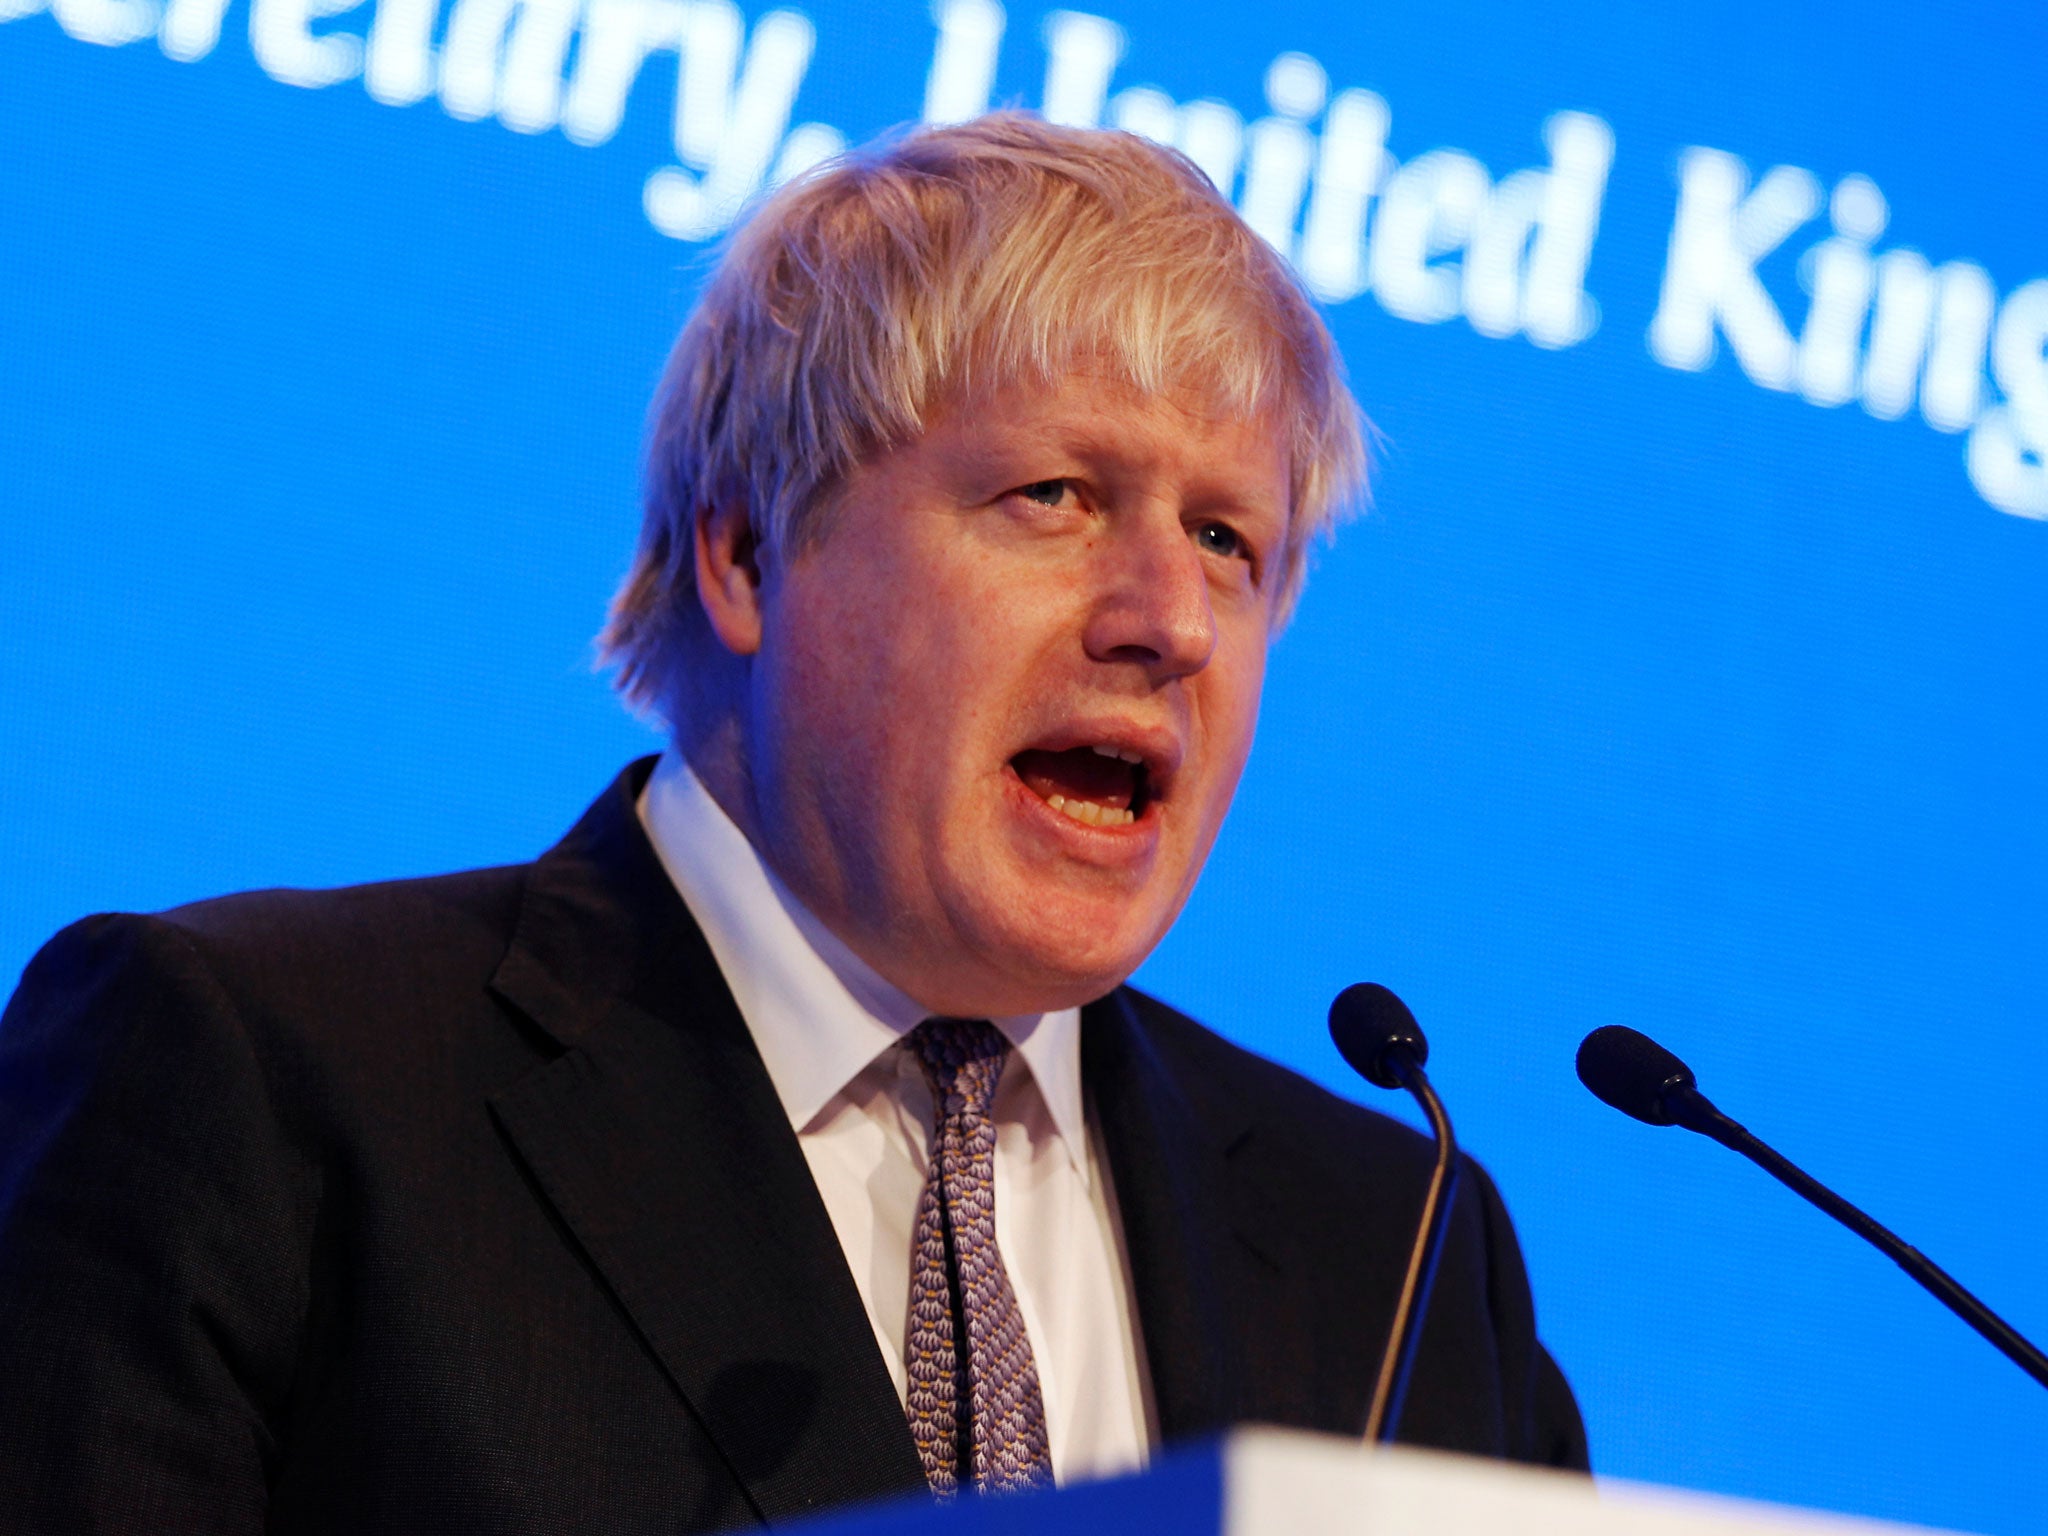 Britain's Foreign Secretary Boris Johnson speaks at the IISS Regional Security Summit "The Manama Dialogue" in Manama, Bahrain December 9, 2016